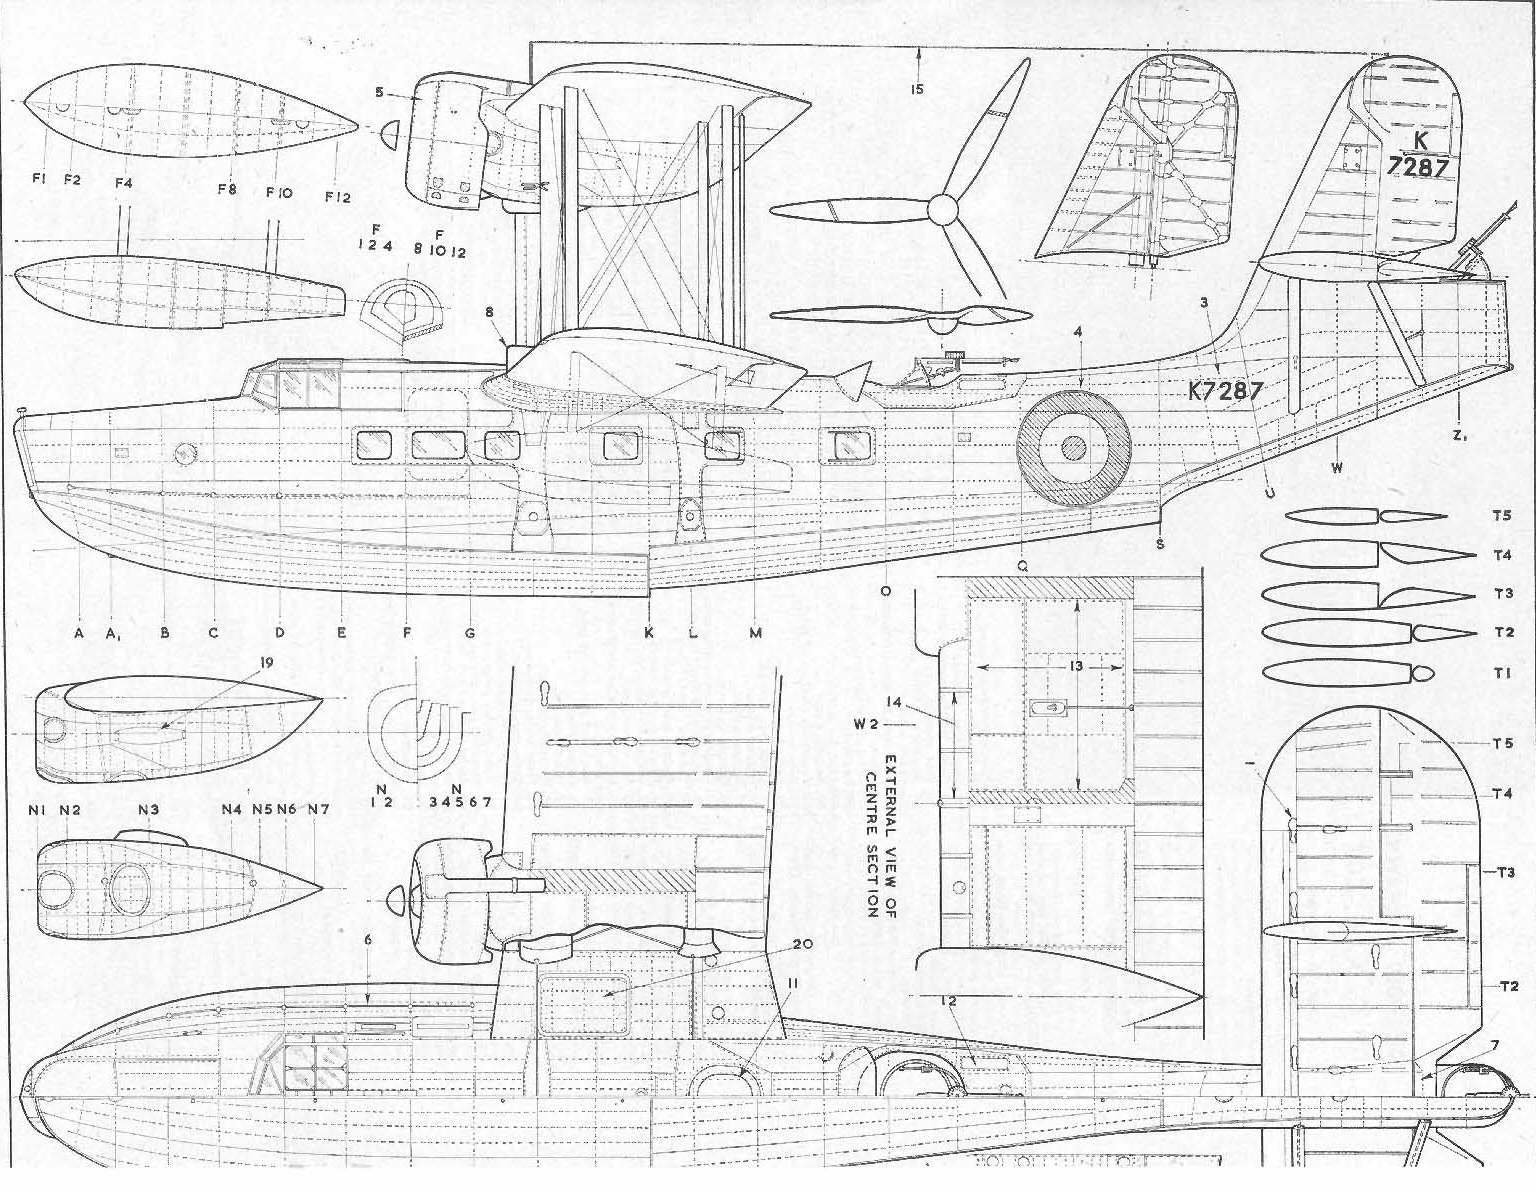 Supermarine Stranraer blueprint